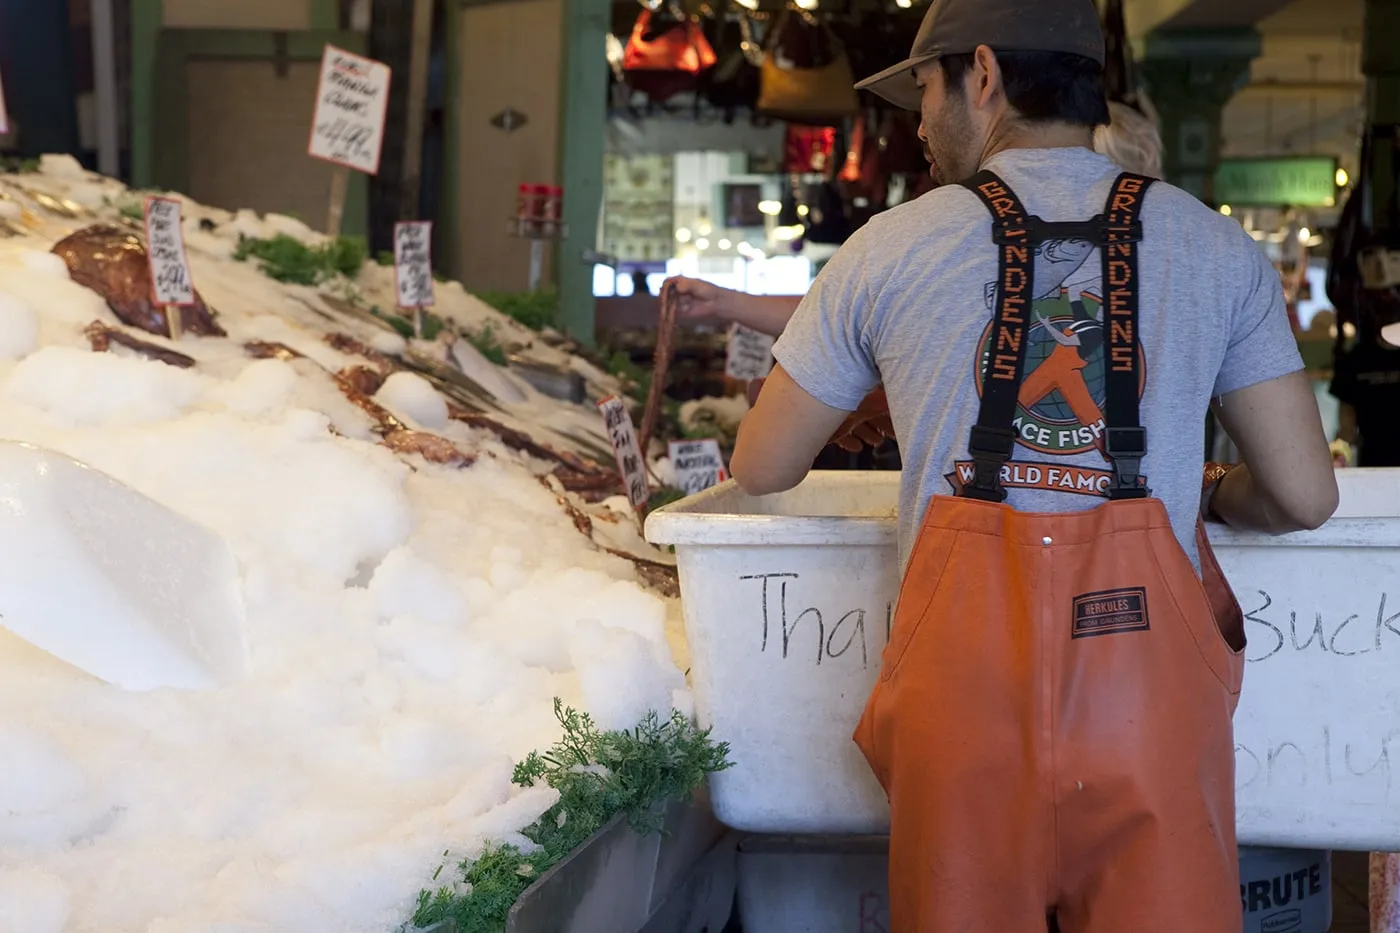 Fishmongers throwing fish at Pike Place Fish Market in Seattle, Washington.